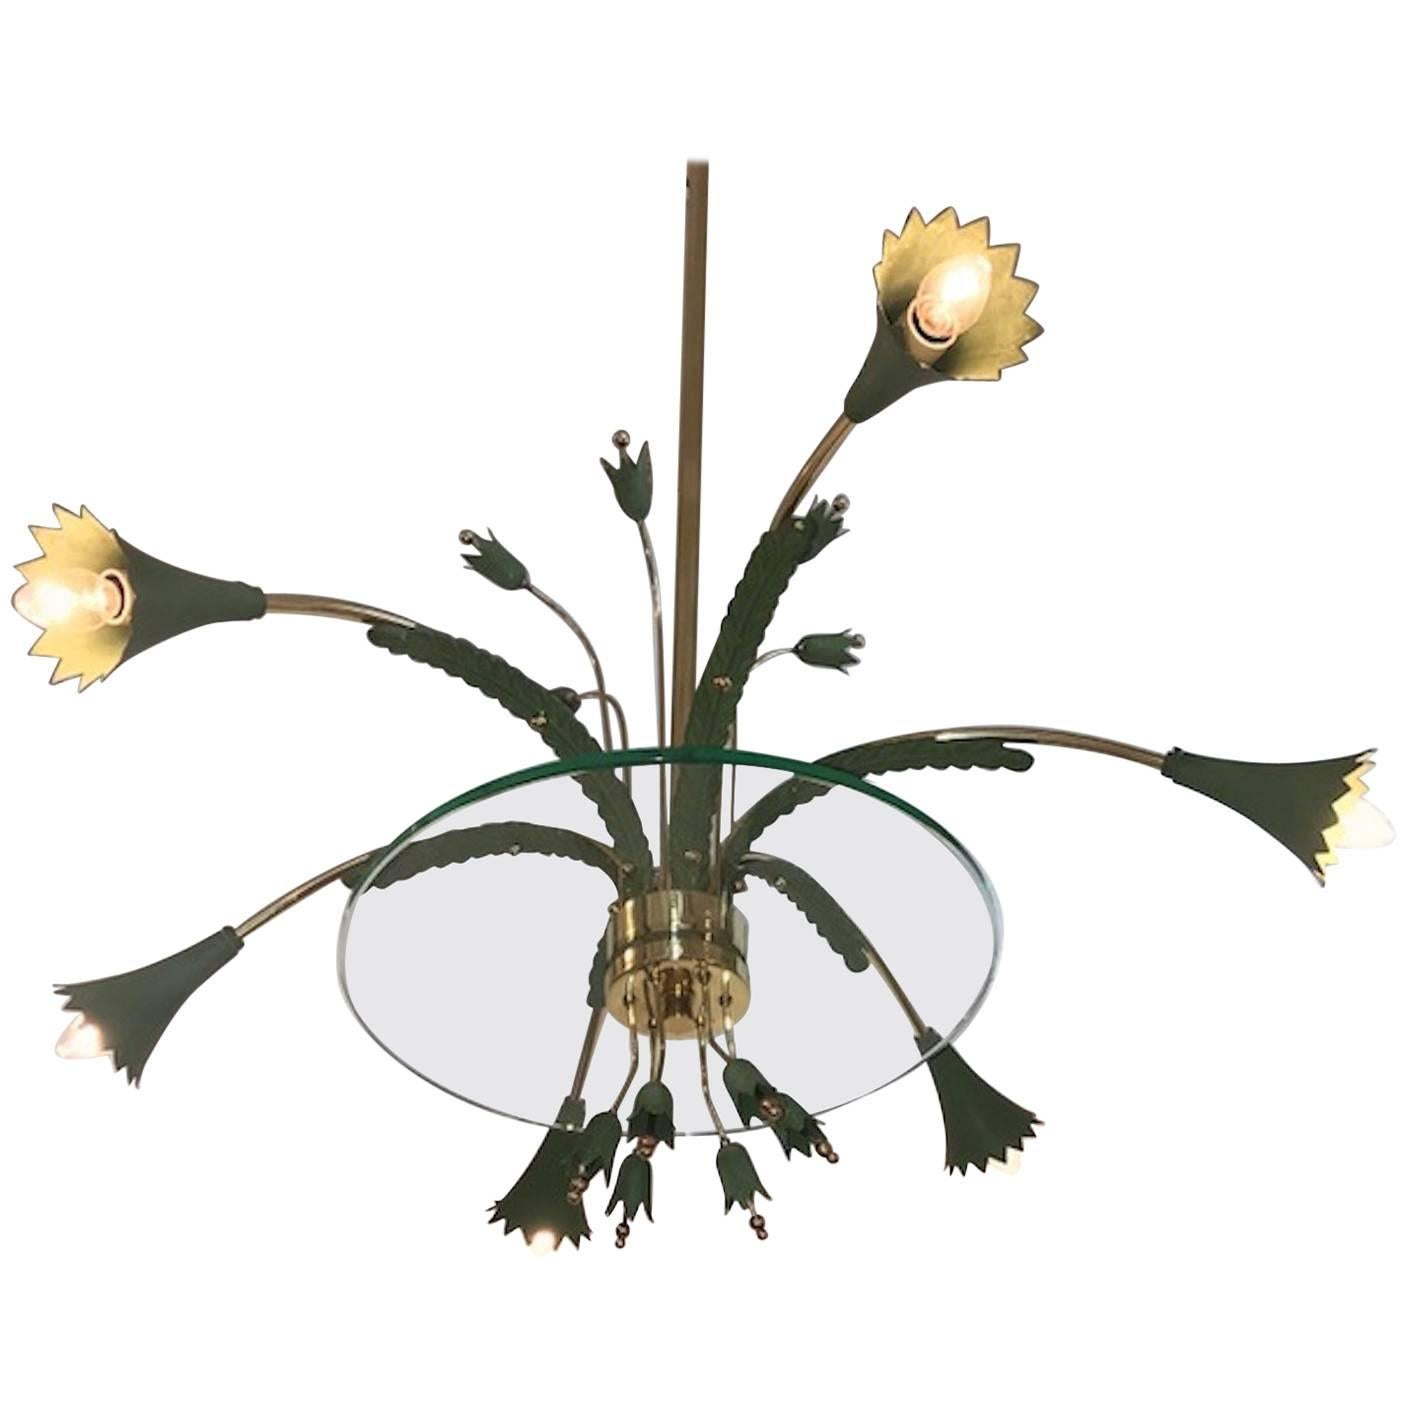 Italian 1940s-1950s Italian Floral Theme Brass, Glass and Enamel Chandelier